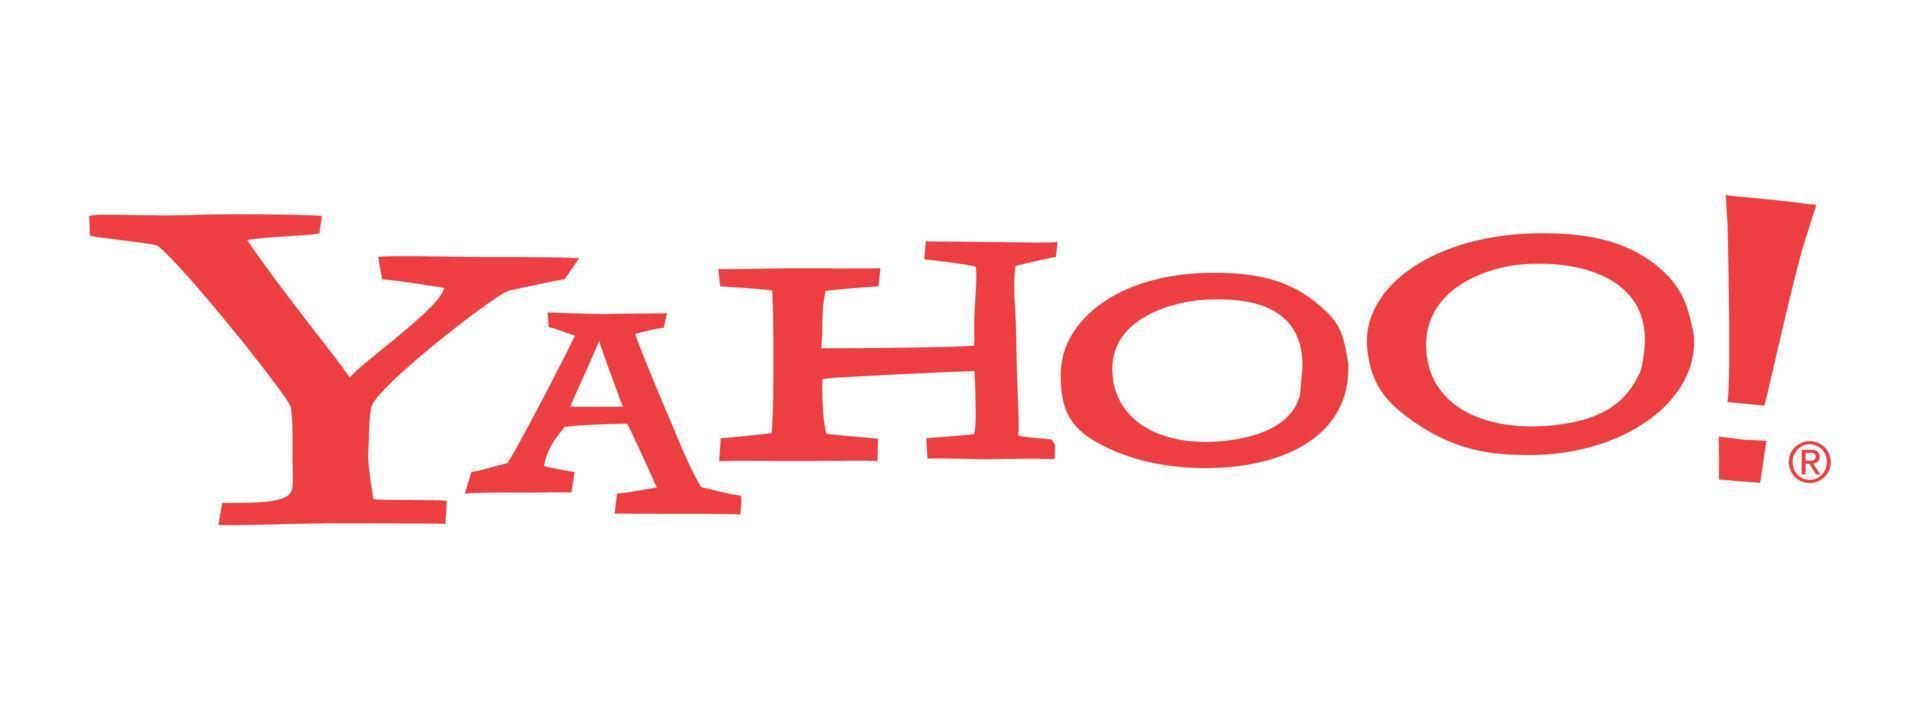 yahoo logo Aan transparant achtergrond vector